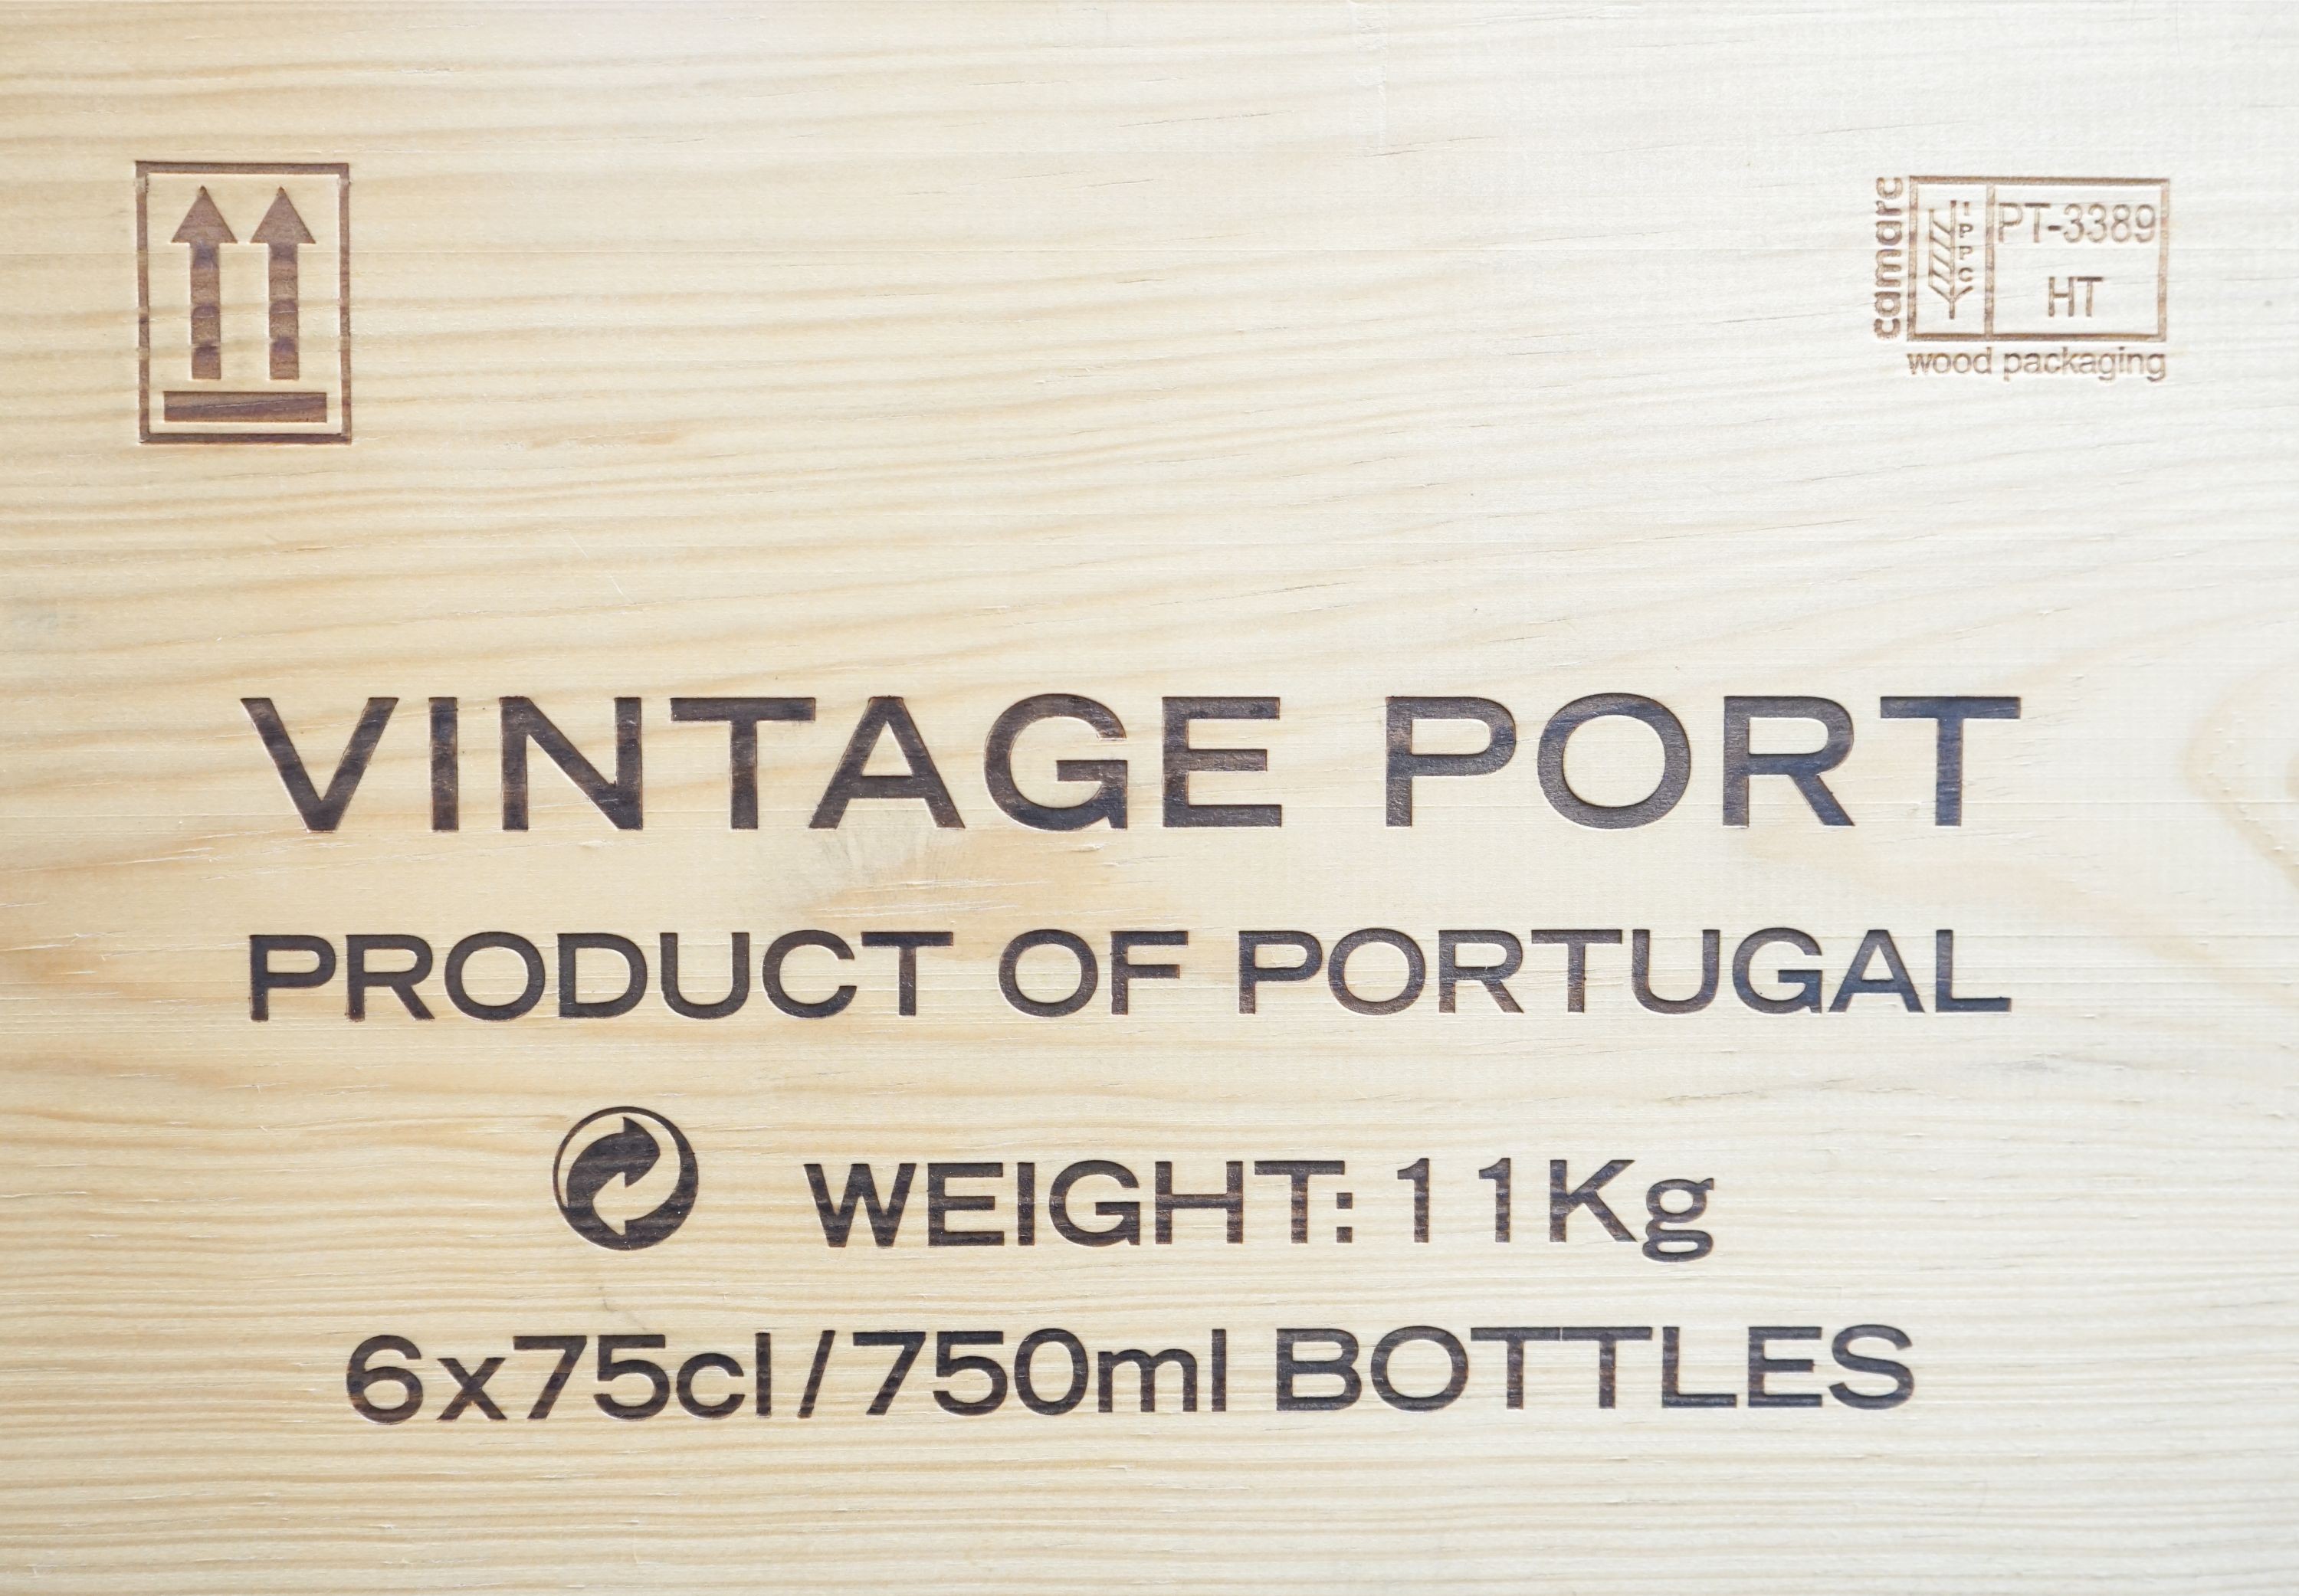 Five bottles of Quinta de Roriz 2011 vintage port in original wooden case